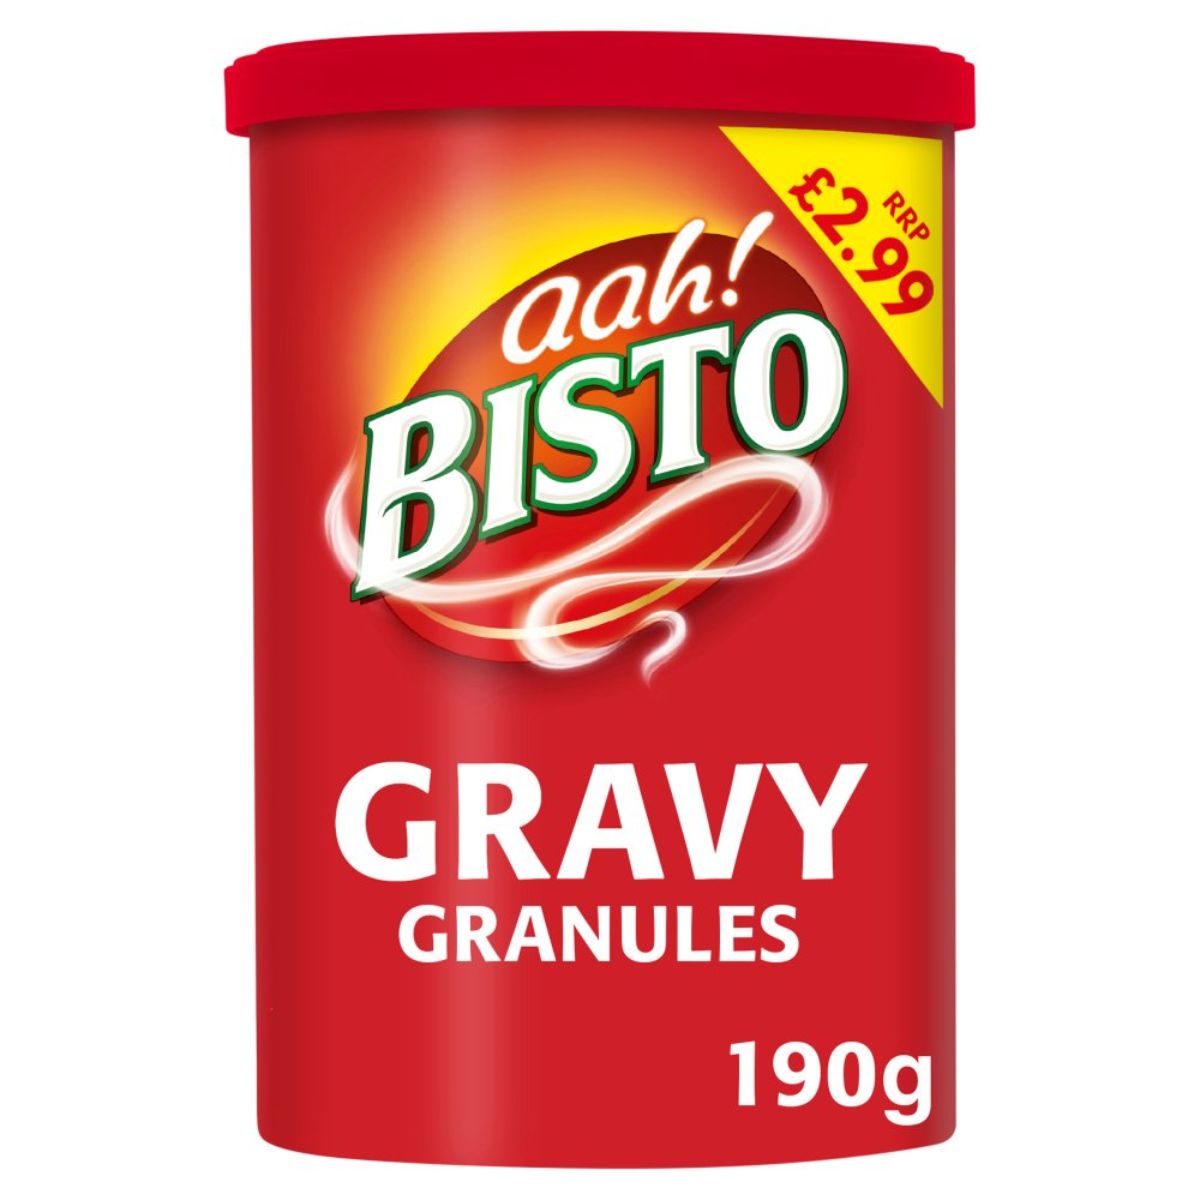 A jar of Bisto - Gravy Granules - 190g.